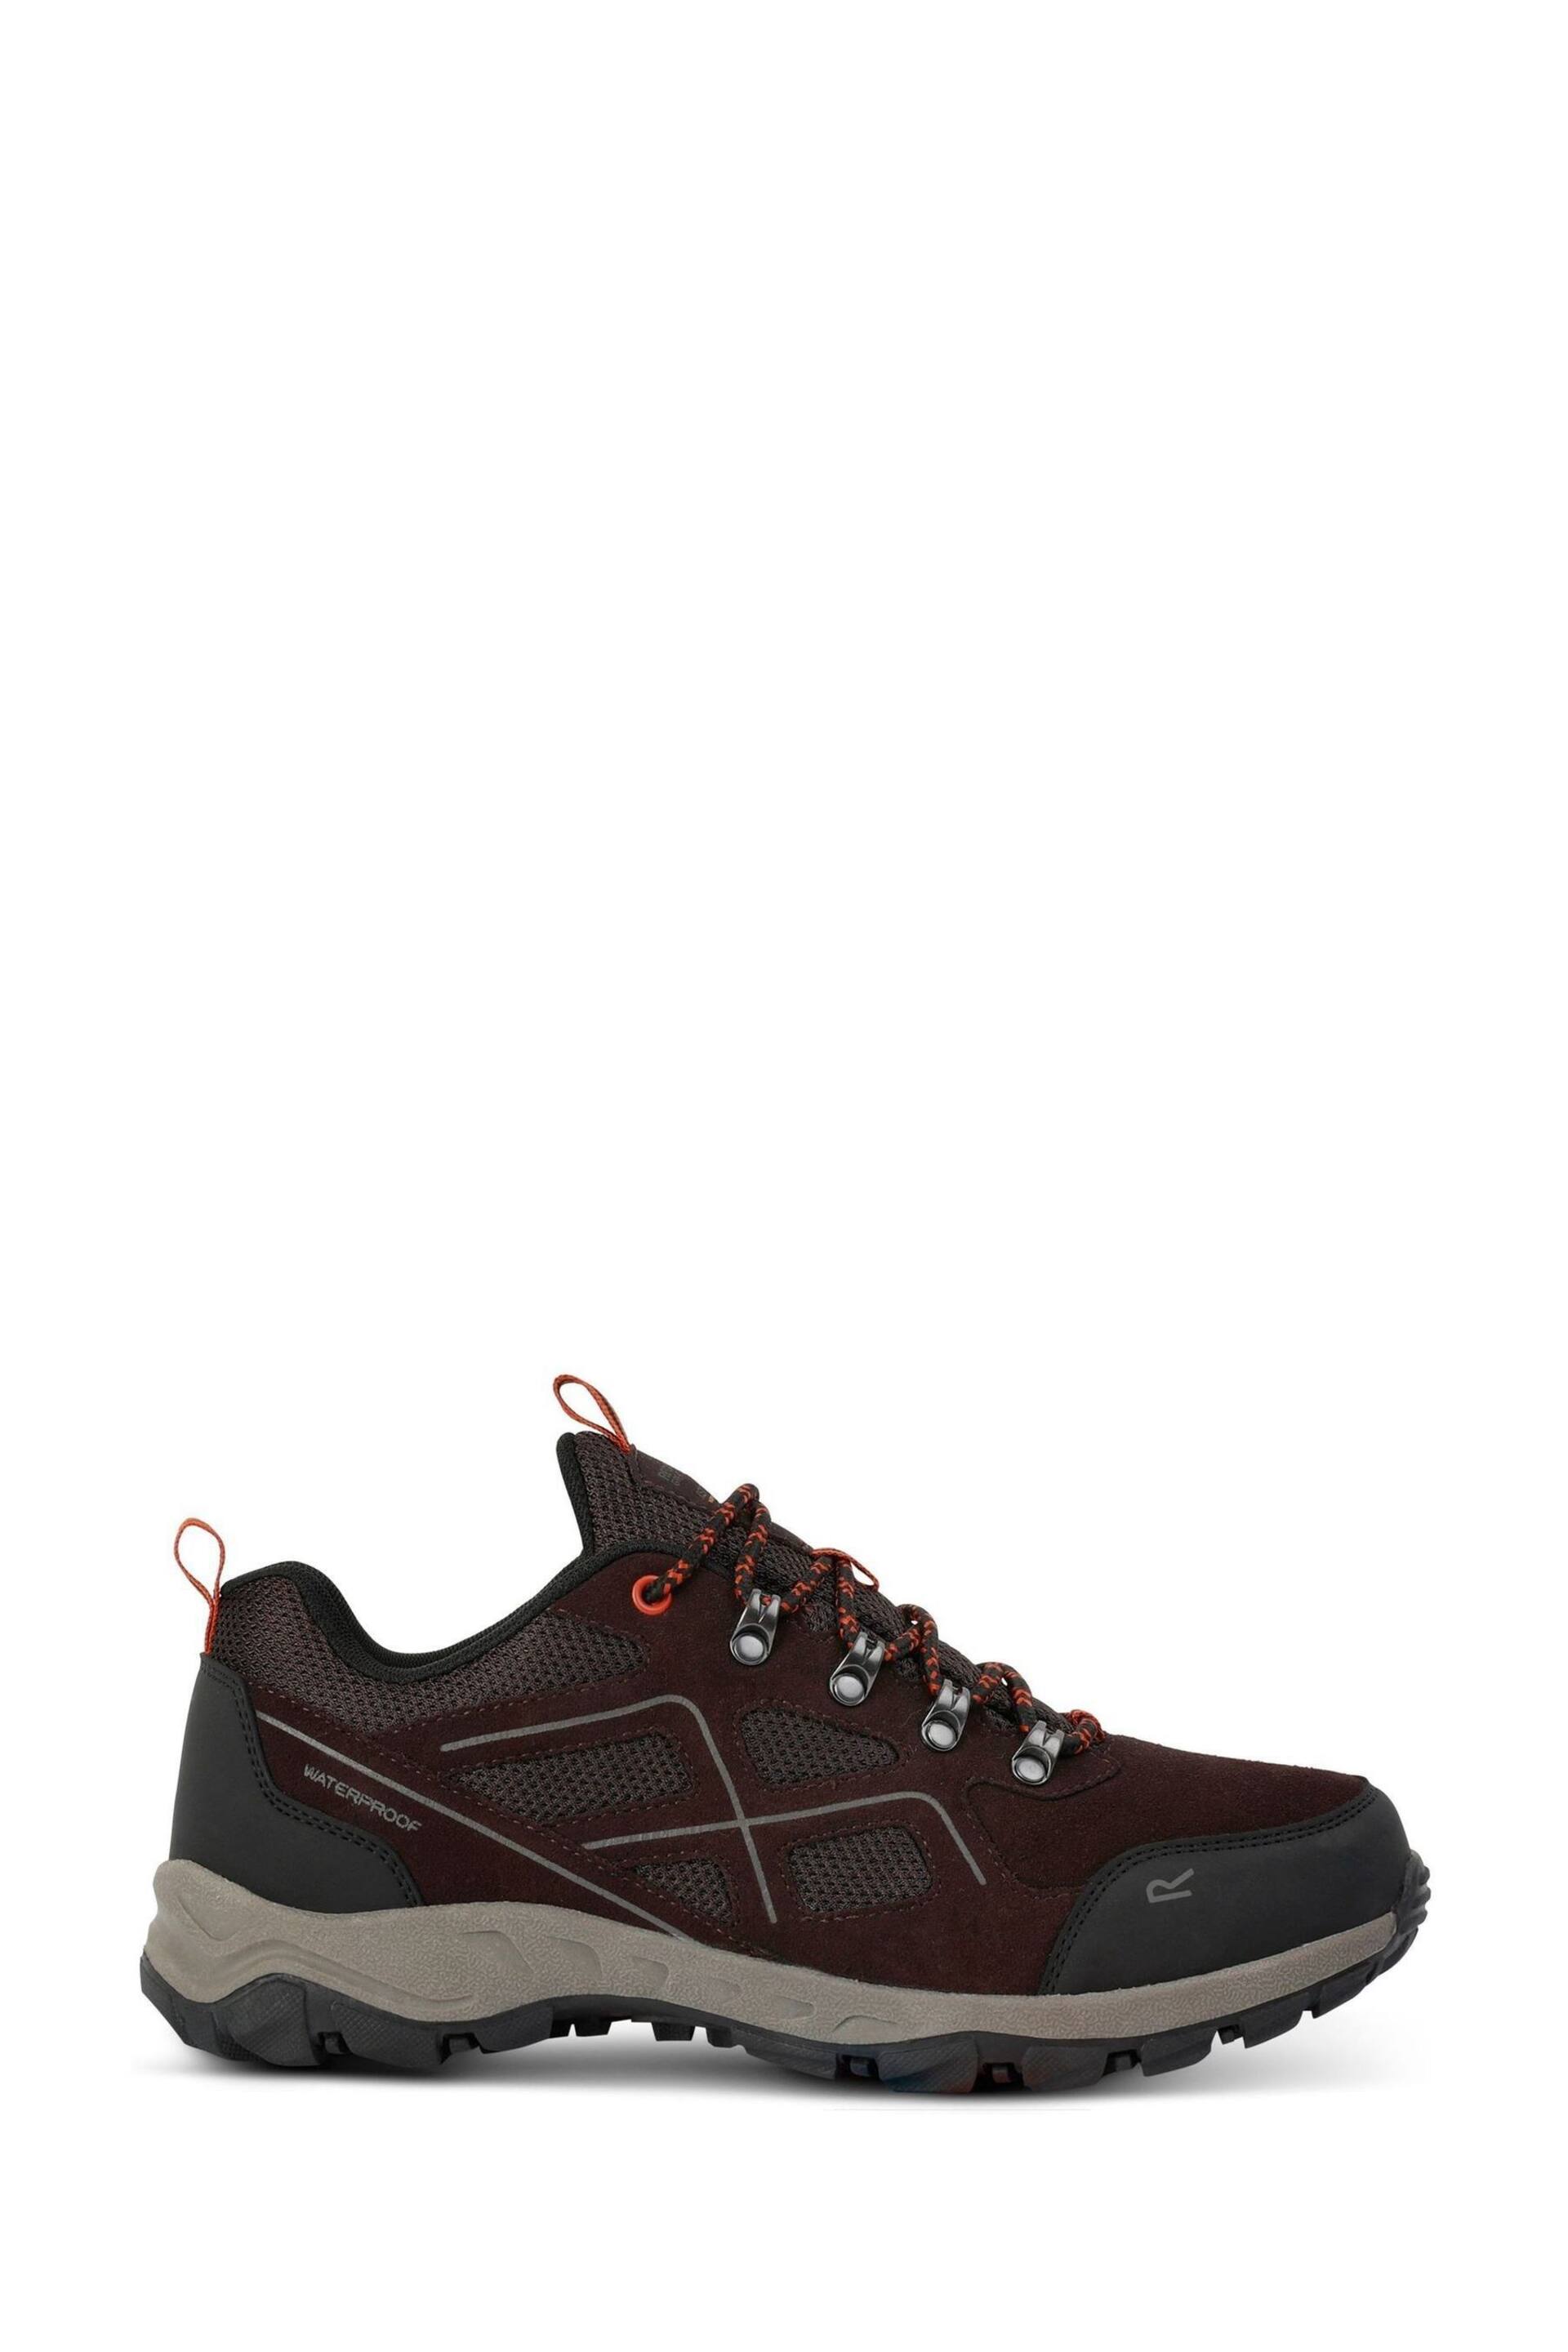 Regatta Brown Vendeavour Suede Waterproof Hiking Shoes - Image 1 of 8